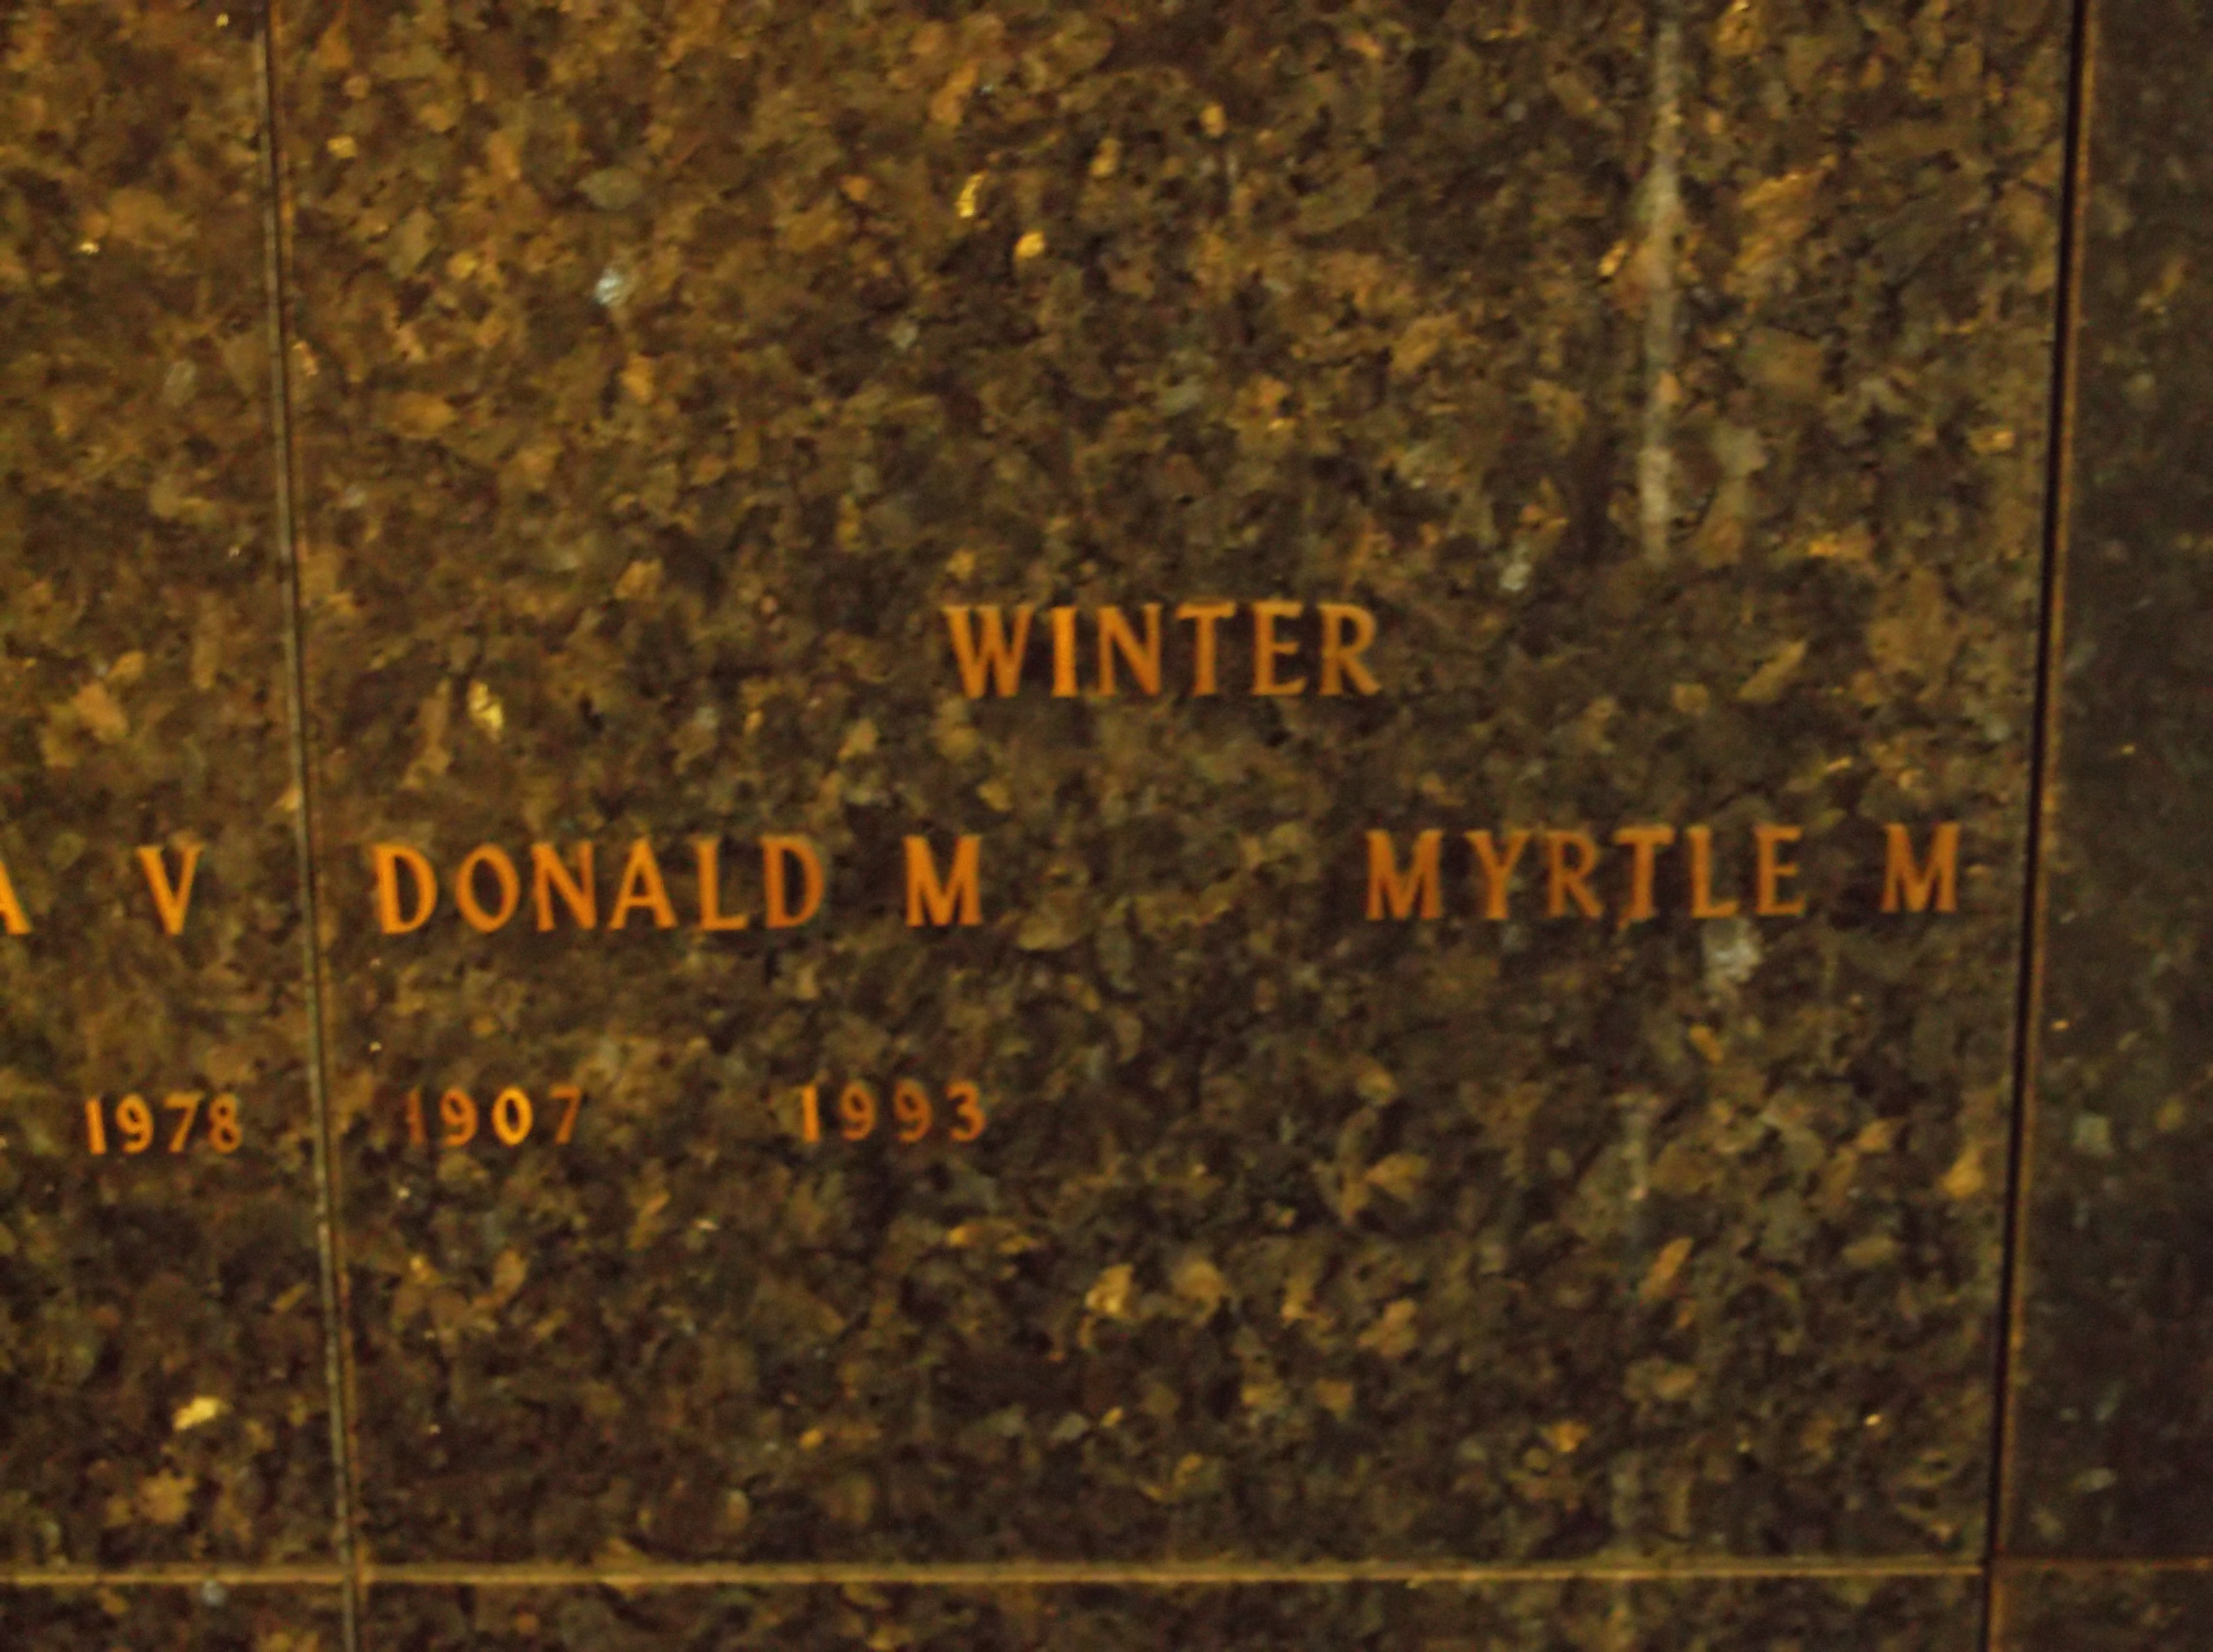 Donald M Winter